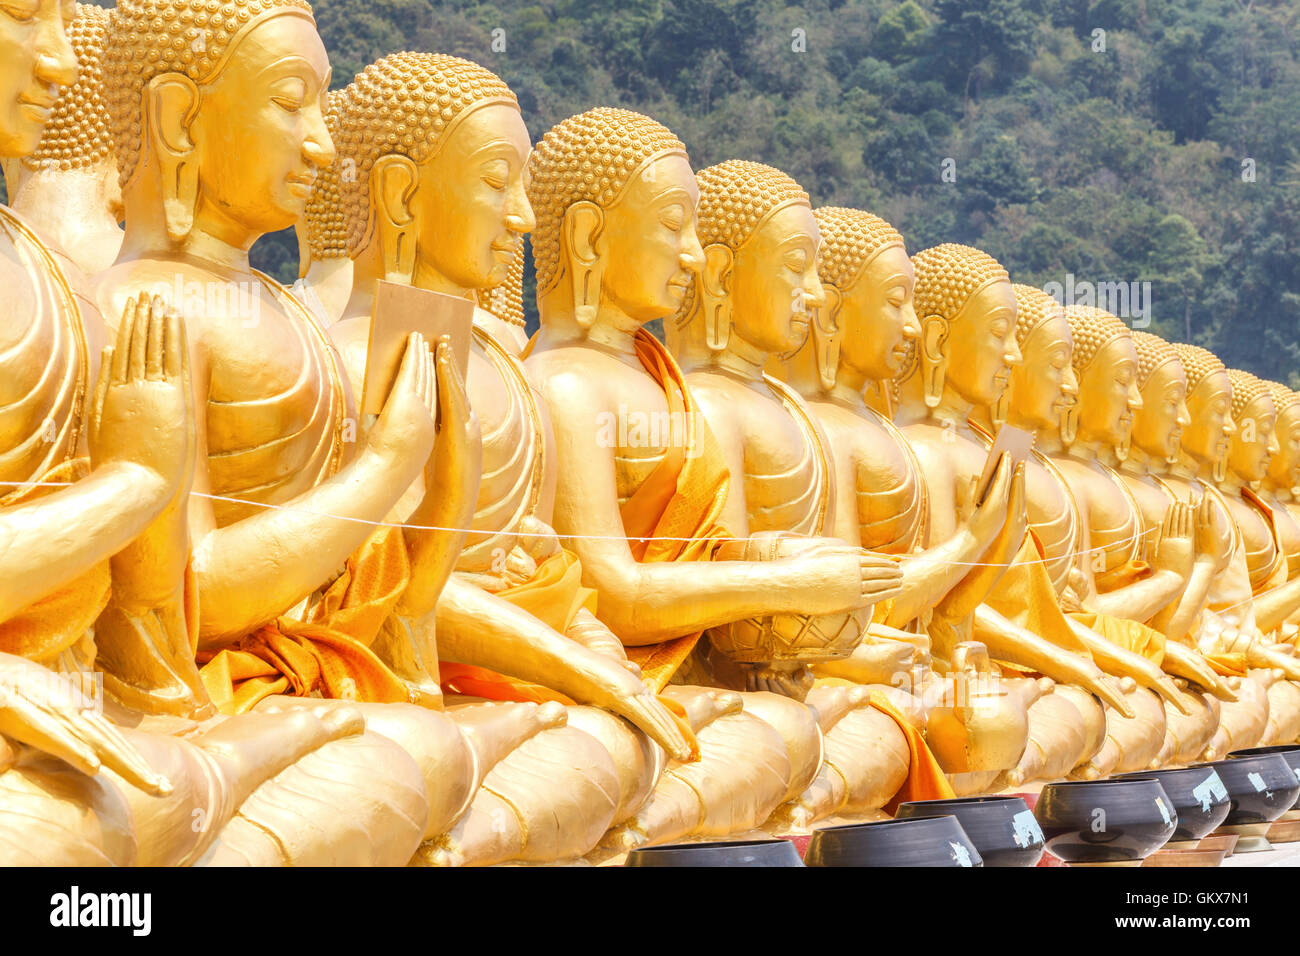 Golden buddha at Buddha Memorial park Stock Photo